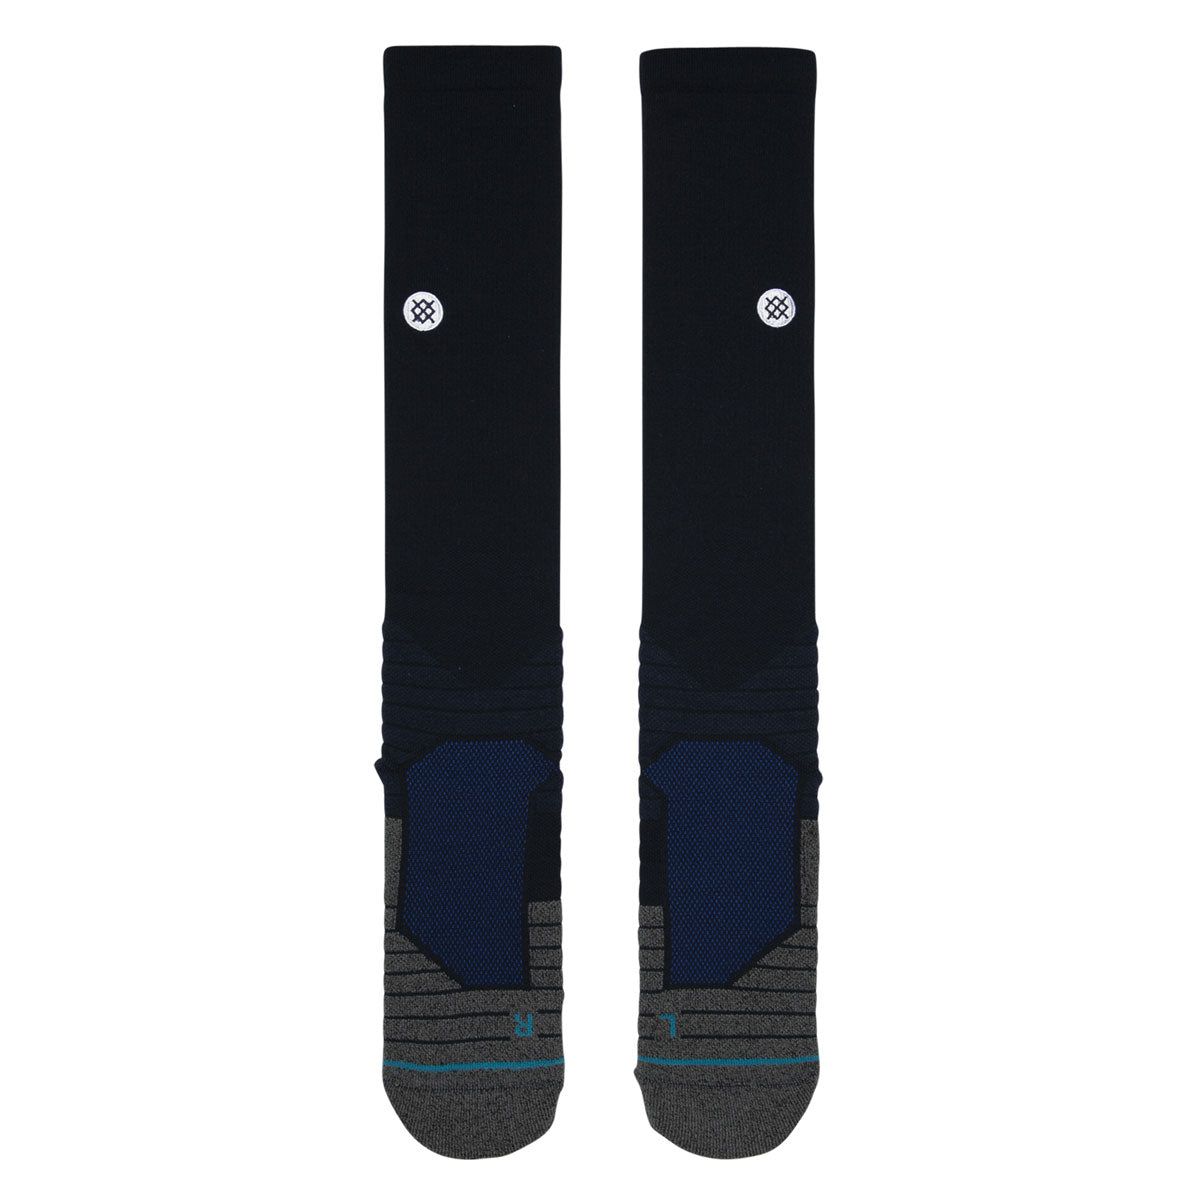 Stance Diamond Pro OTC Socks - Dark Navy image 2